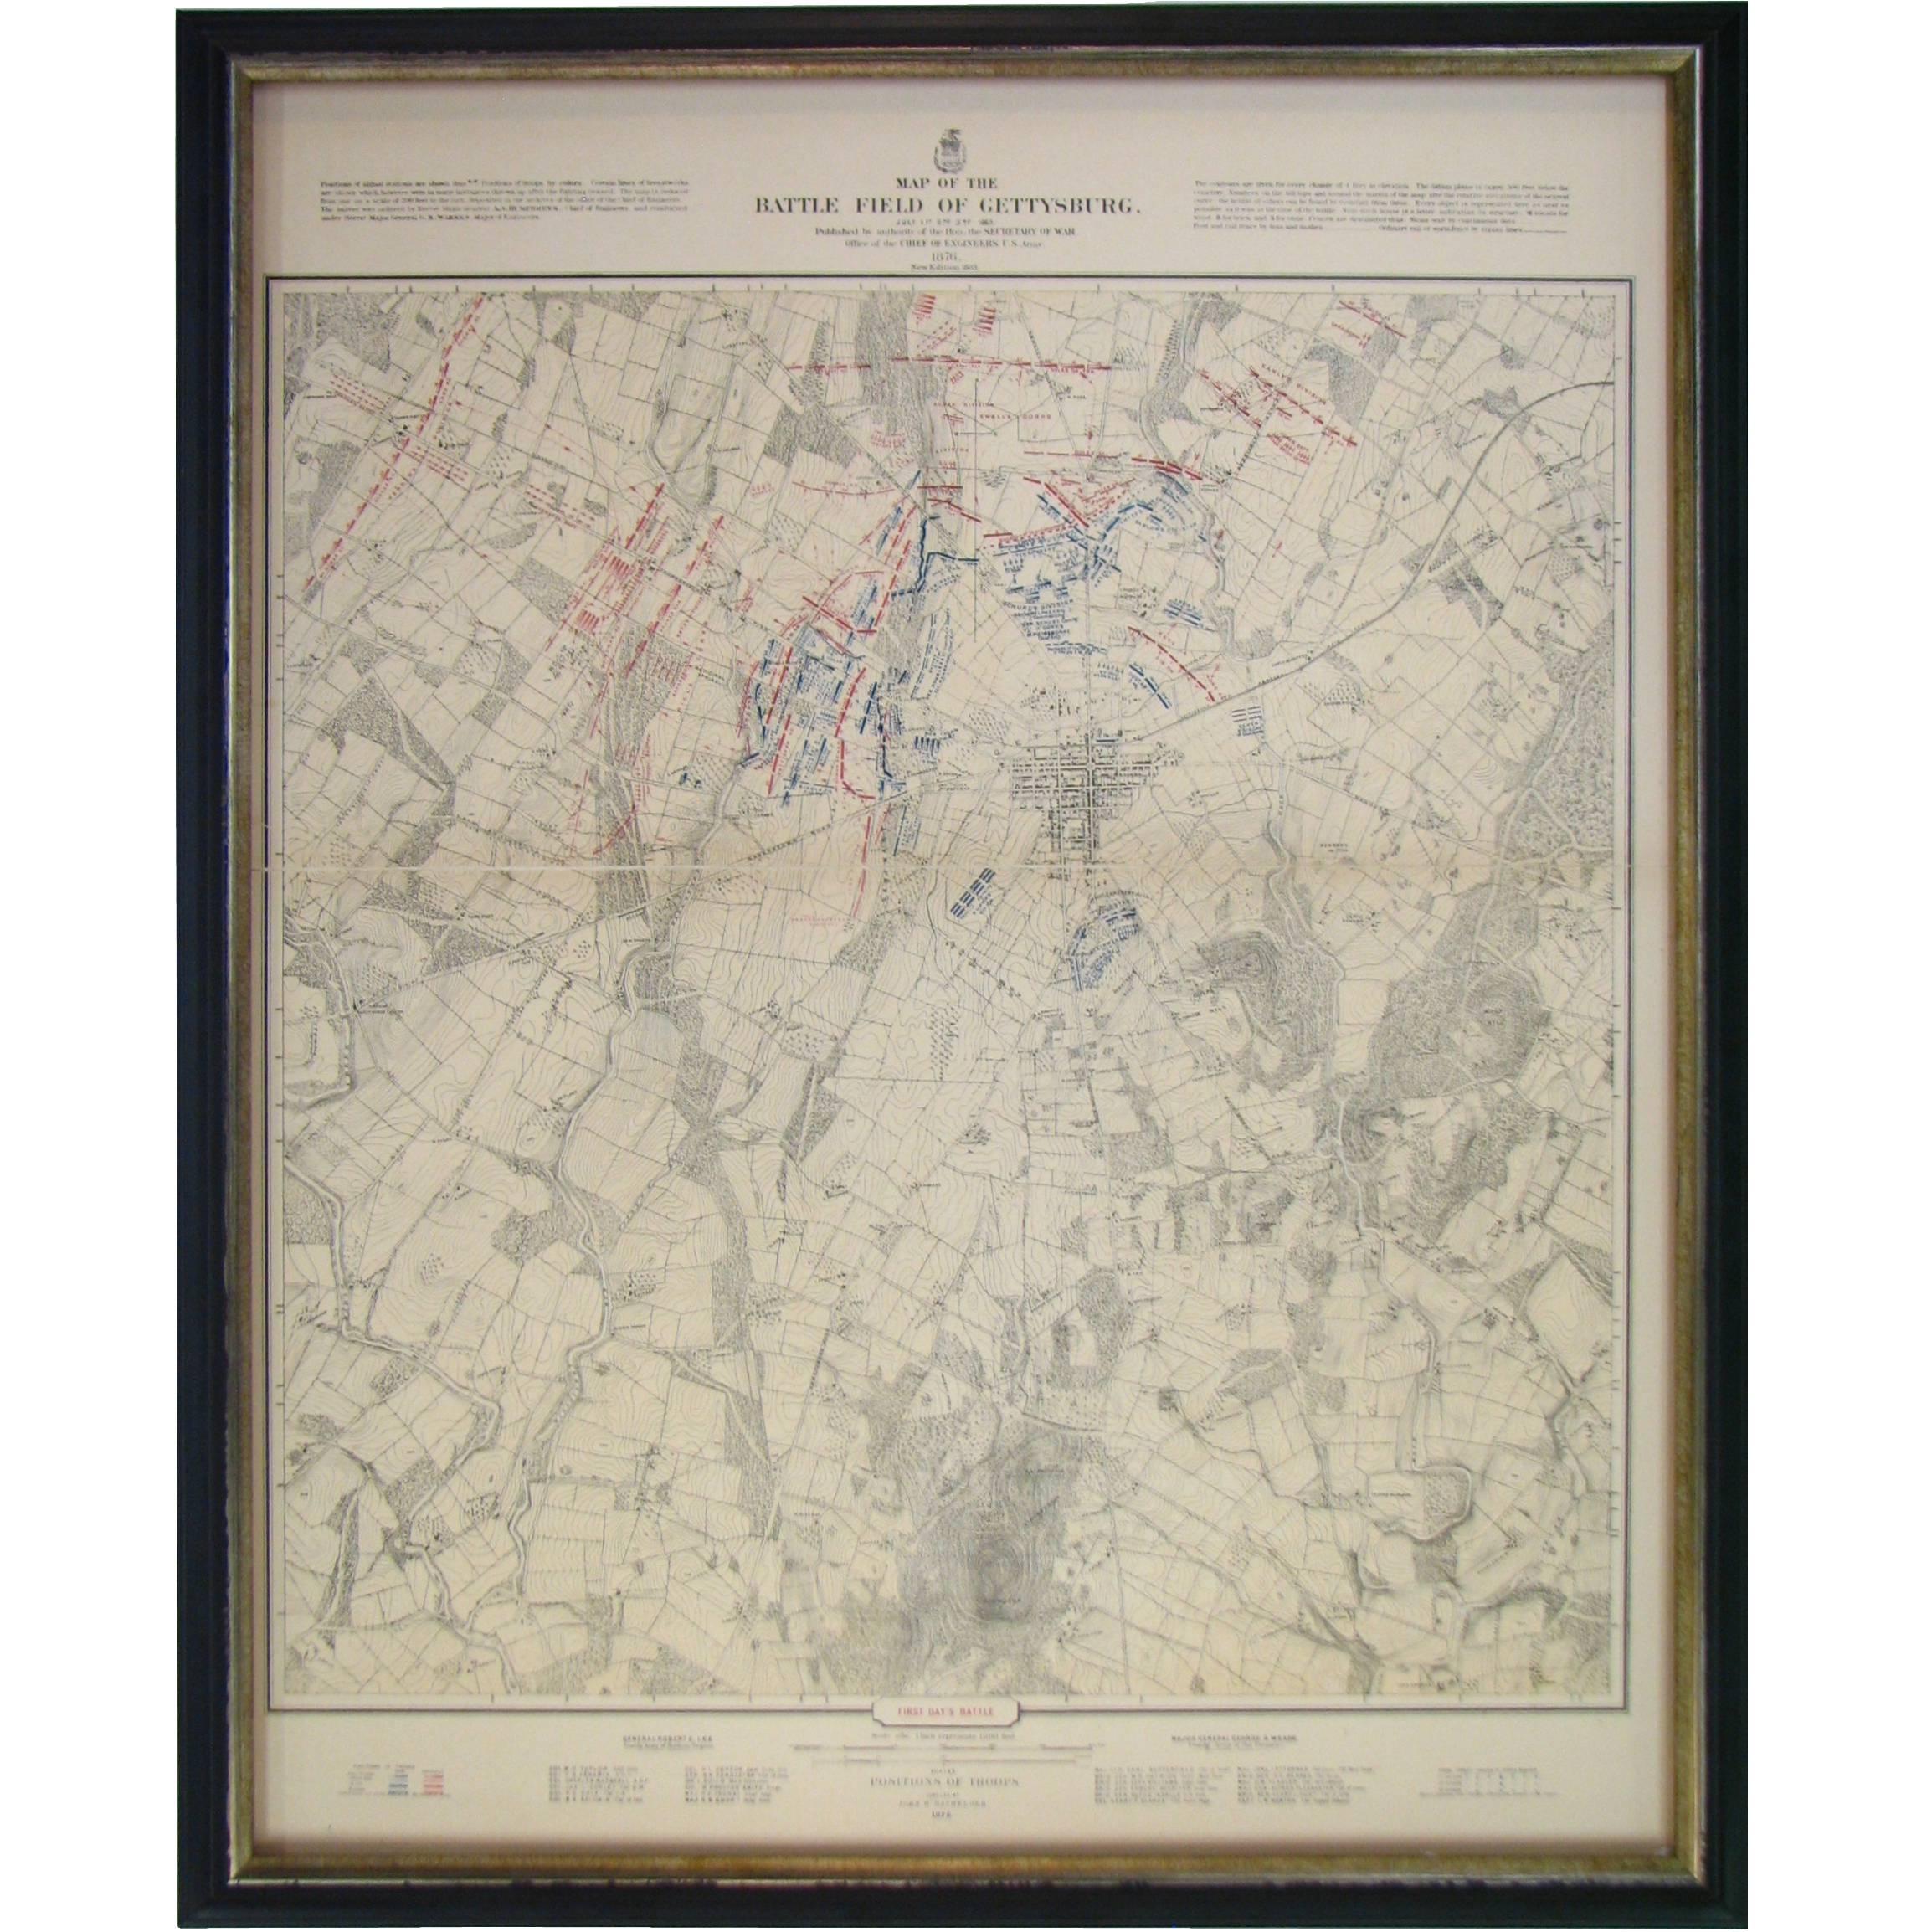 Gettysburg Battlefield Maps Set of Three First Edition Maps, circa 1876